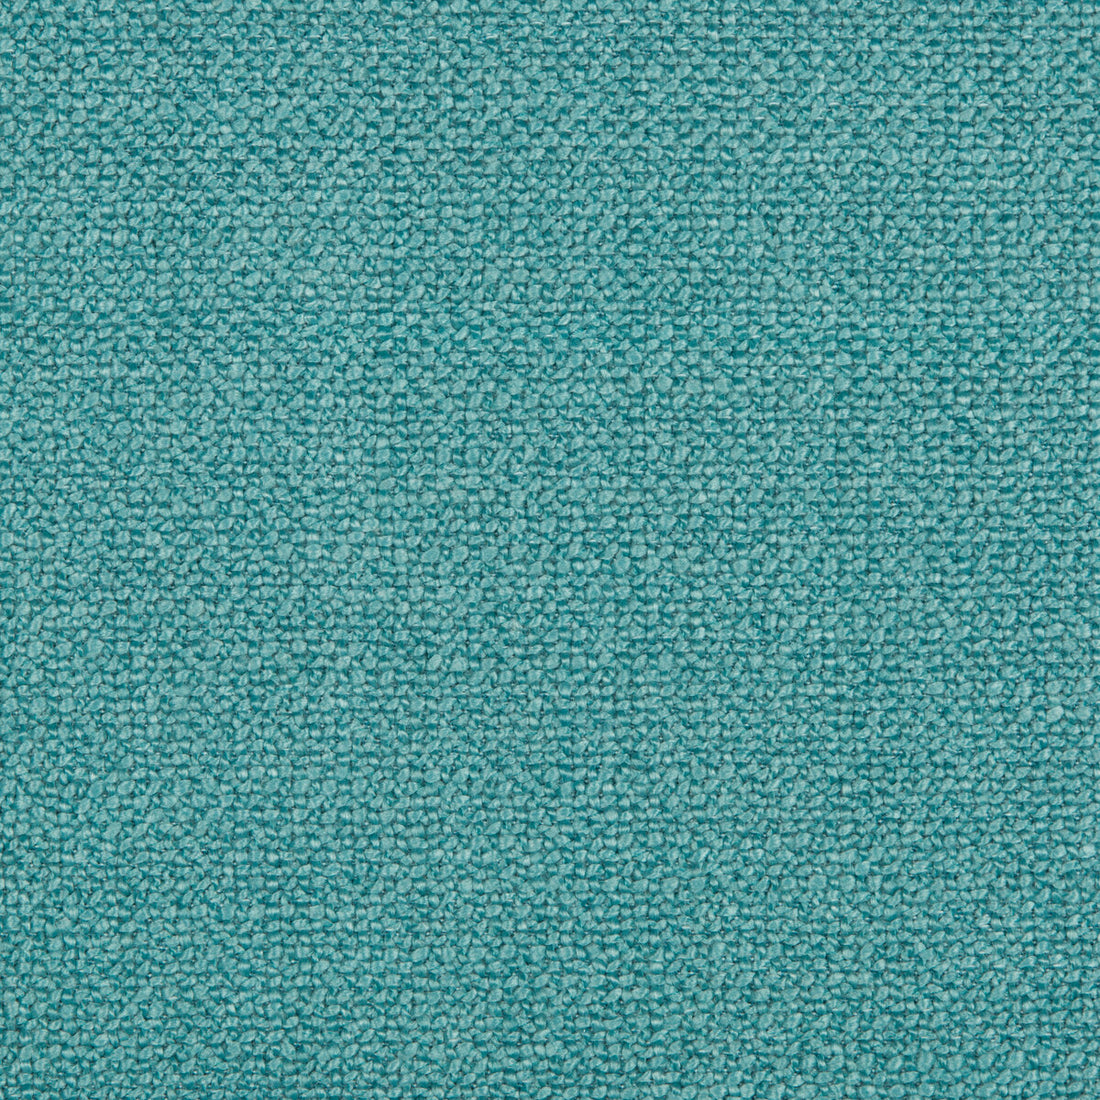 Kravet Smart fabric in 35379-35 color - pattern 35379.35.0 - by Kravet Smart in the Performance Kravetarmor collection